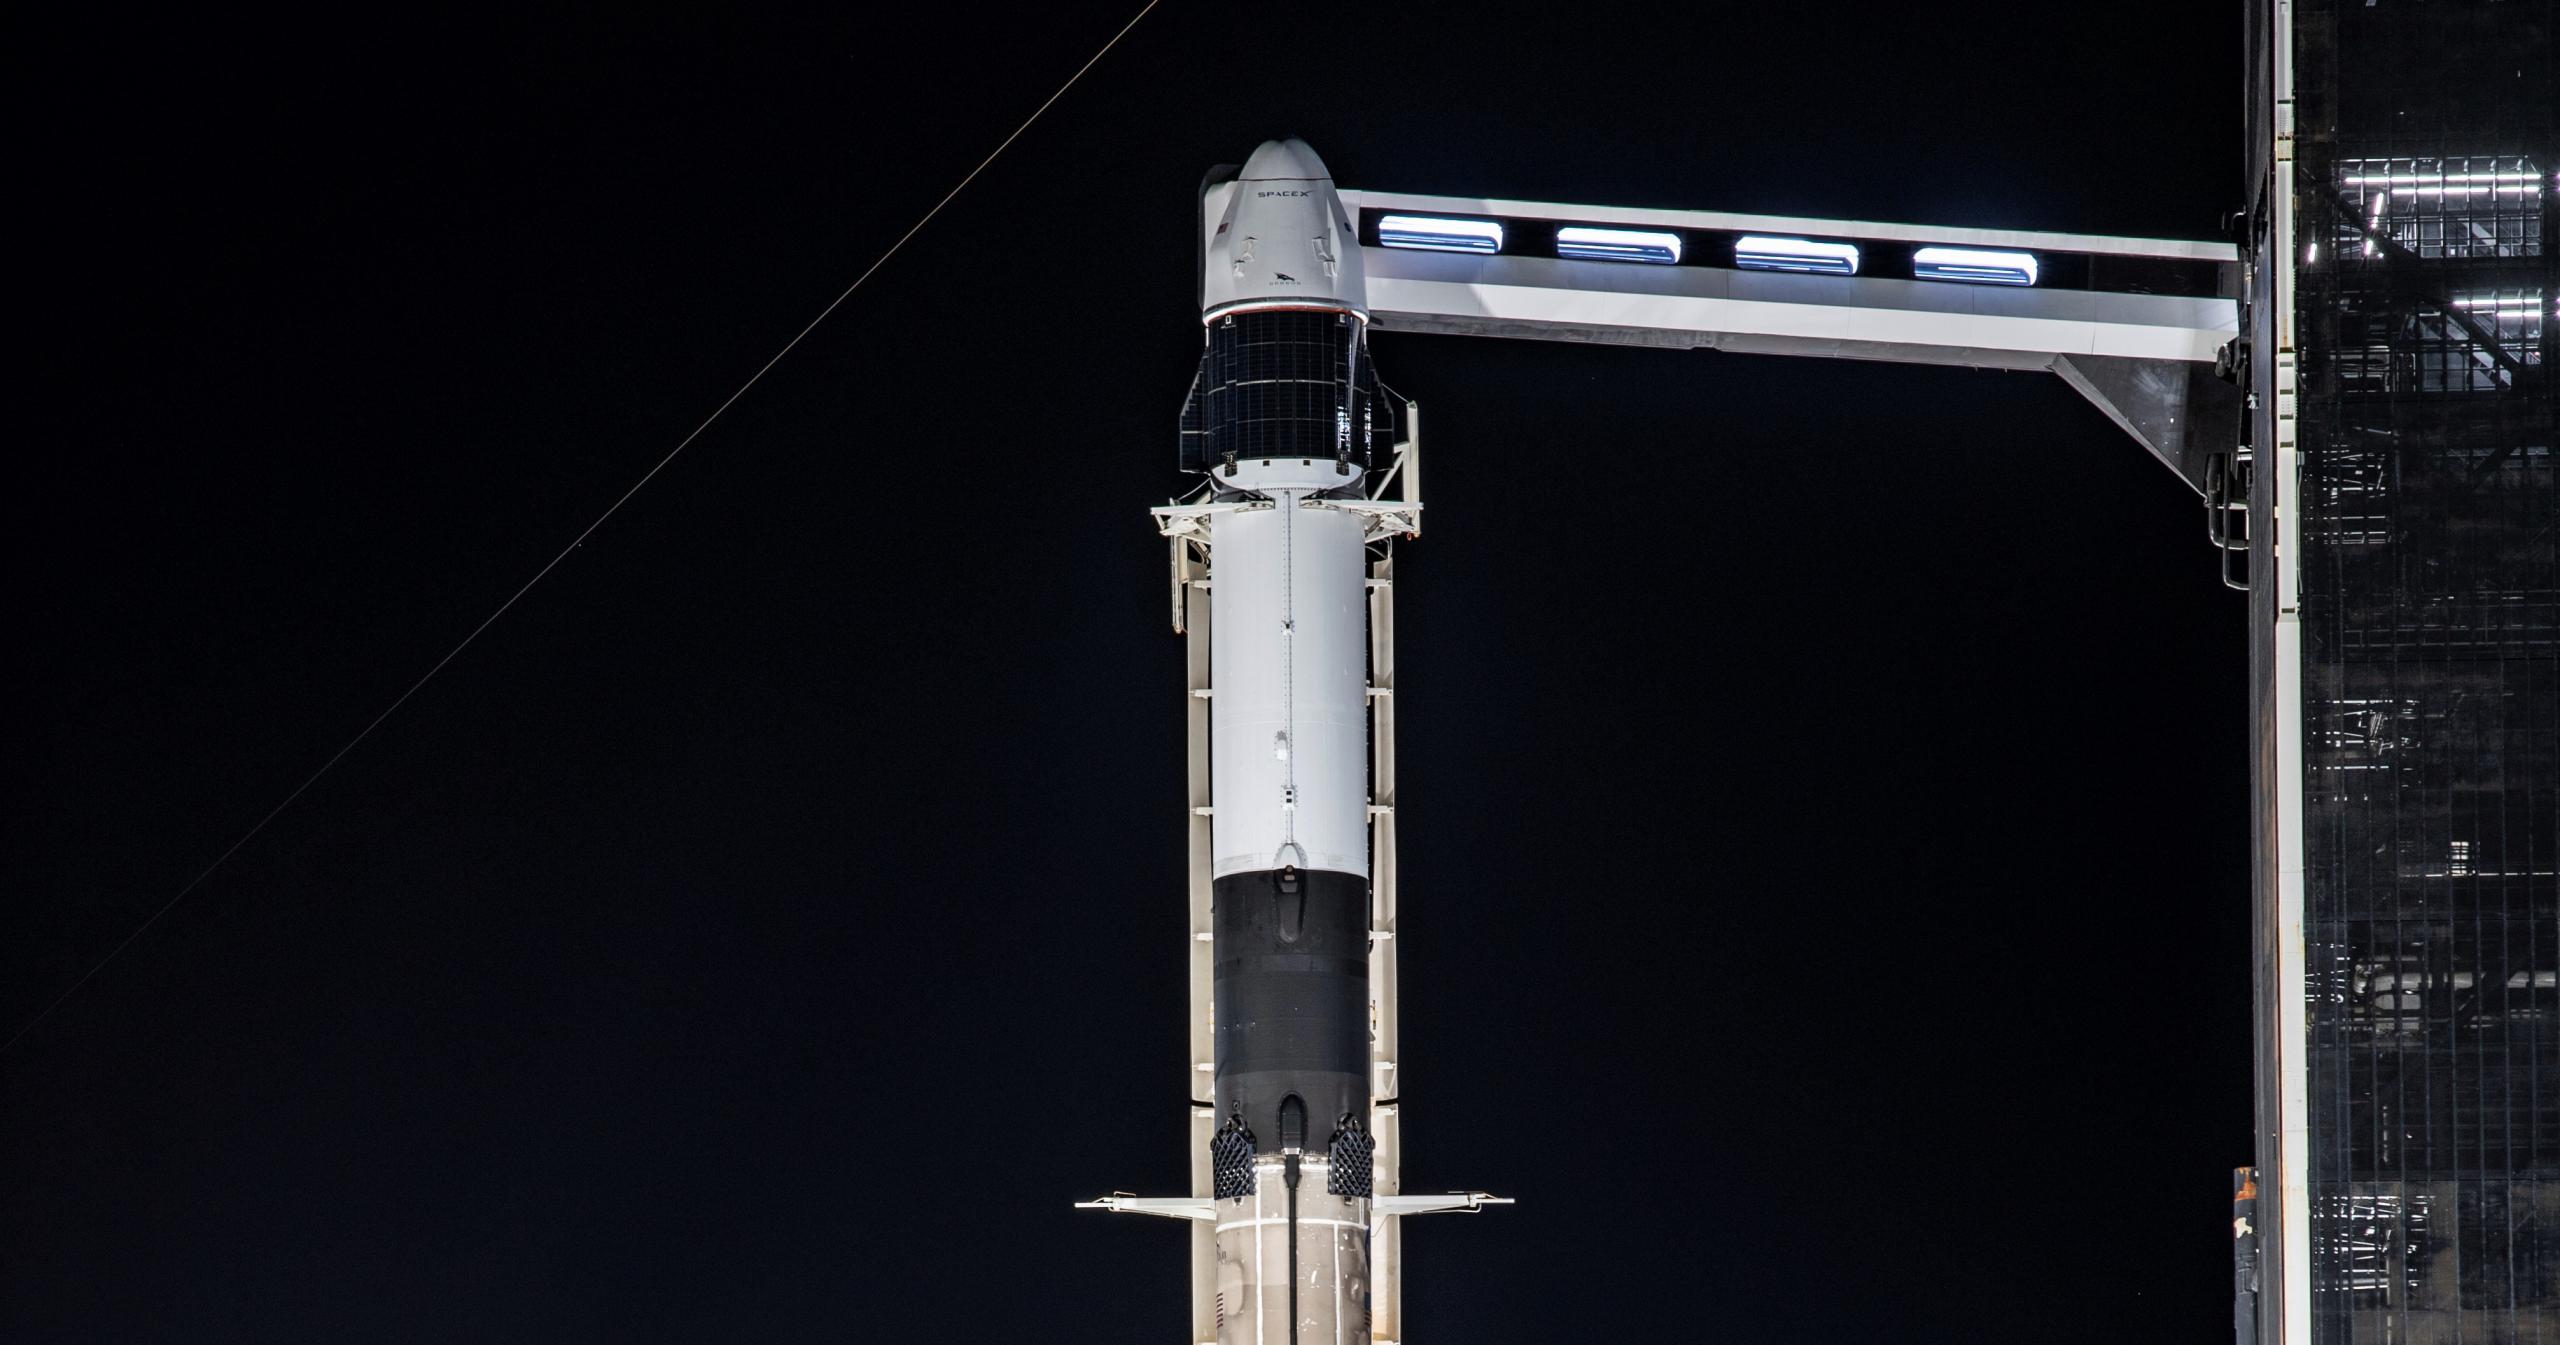 CRS-21 Cargo Dragon 2 Falcon 9 B1058 120220 (SpaceX) vertical 3 crop (c)